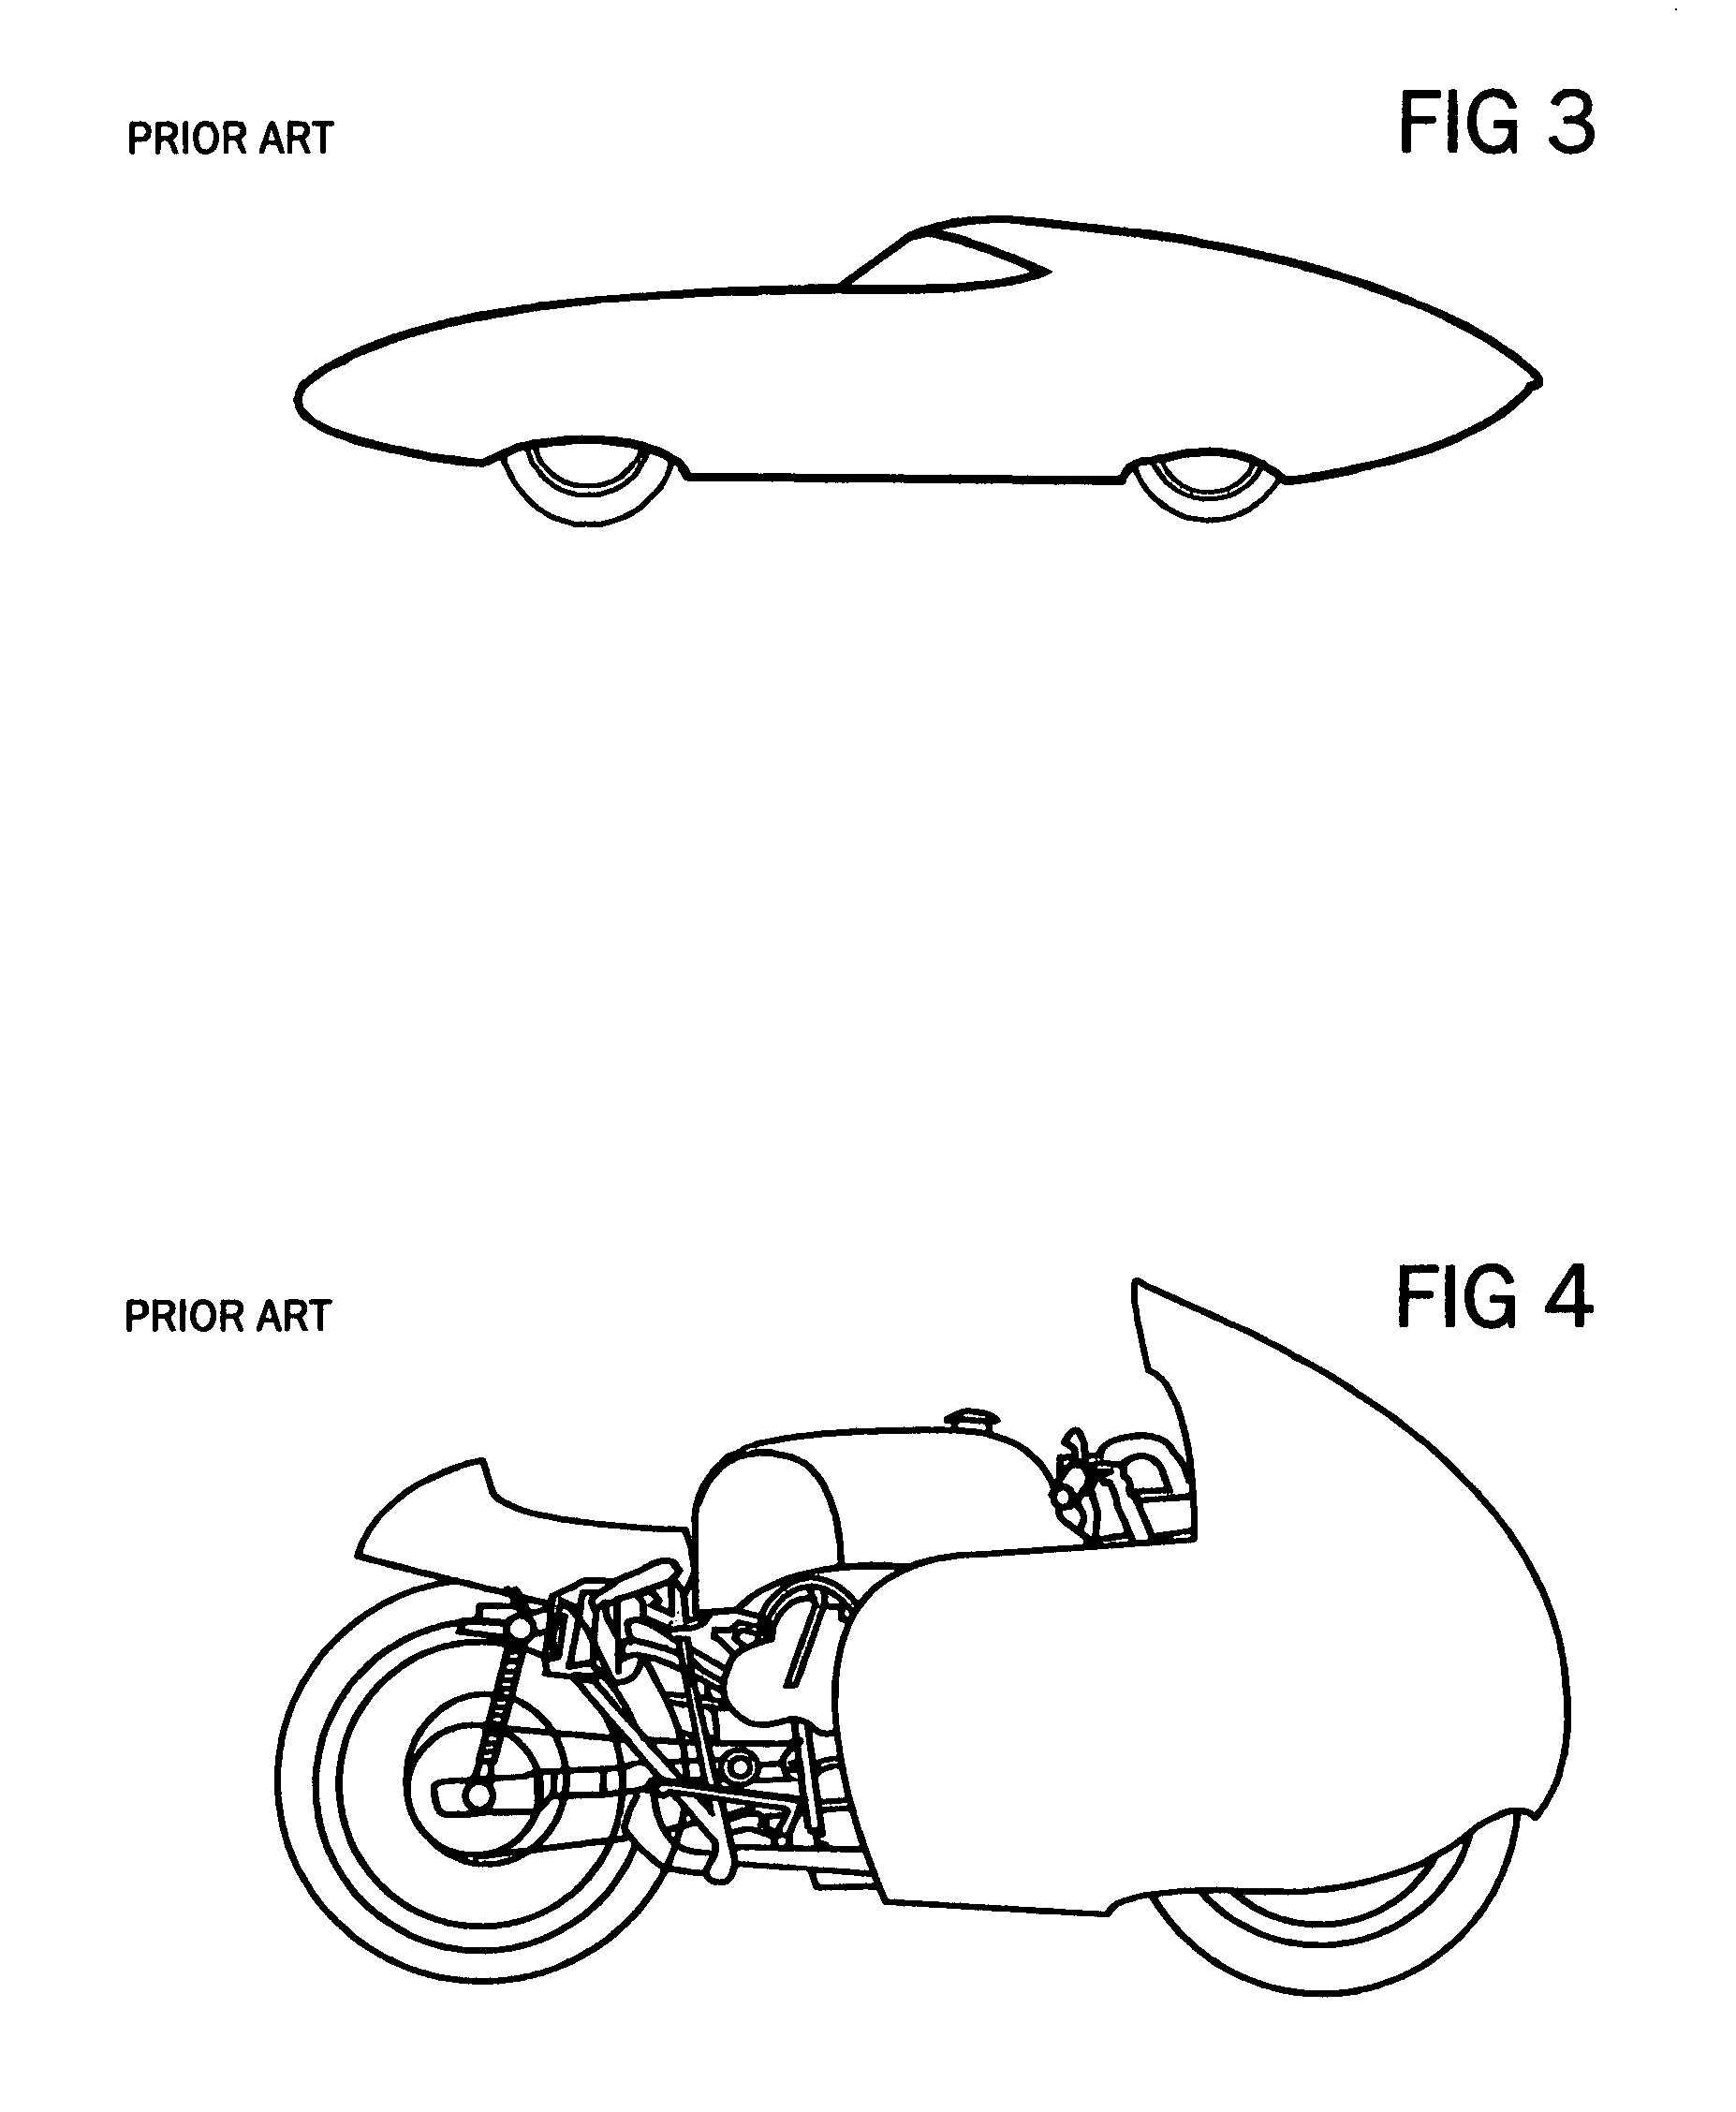 Aerodynamic hemisphere and socket motorcycle fairing